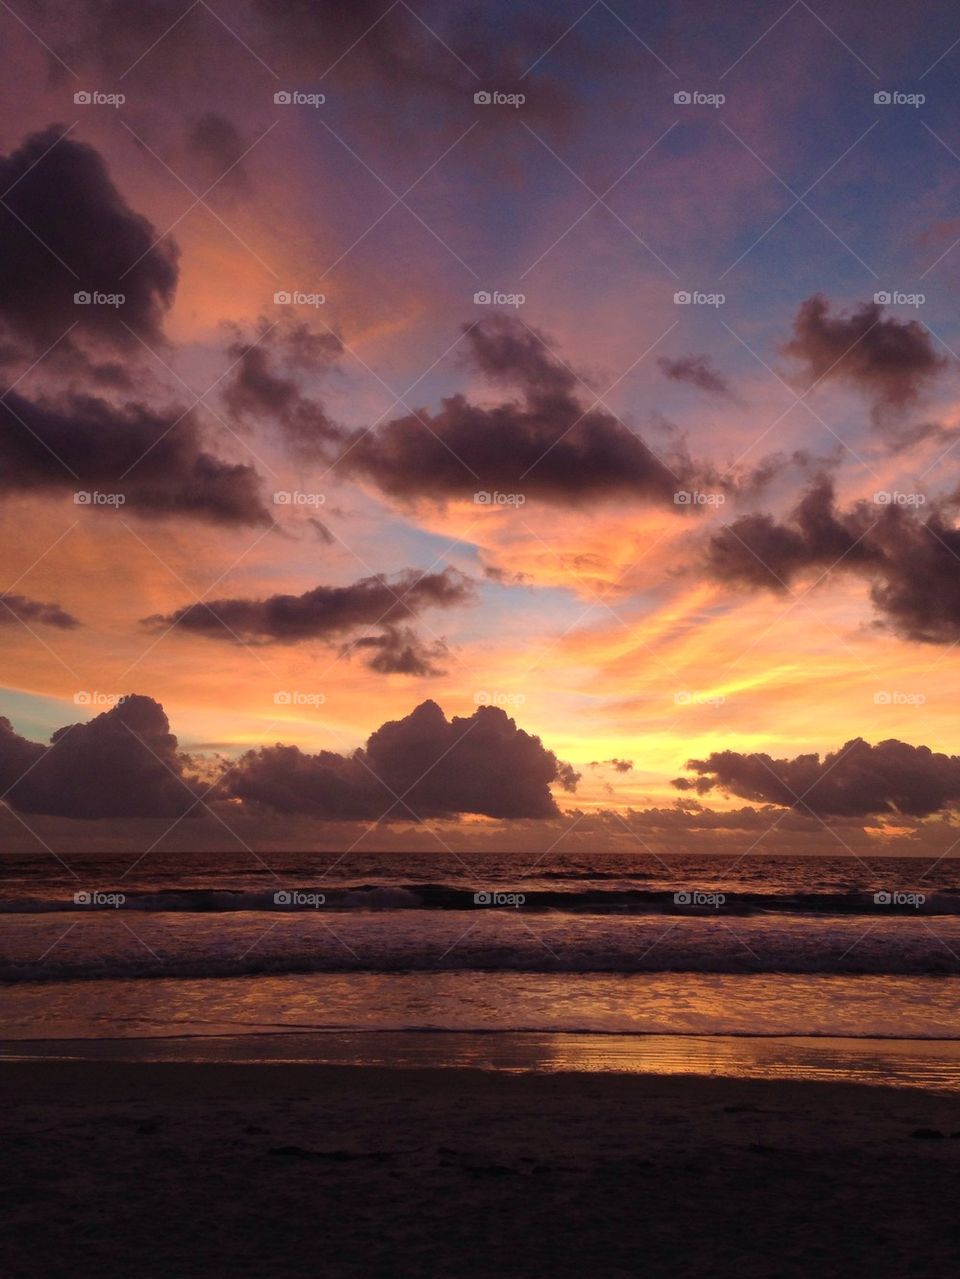 Sunrise at Jacksonville Beach, Fl